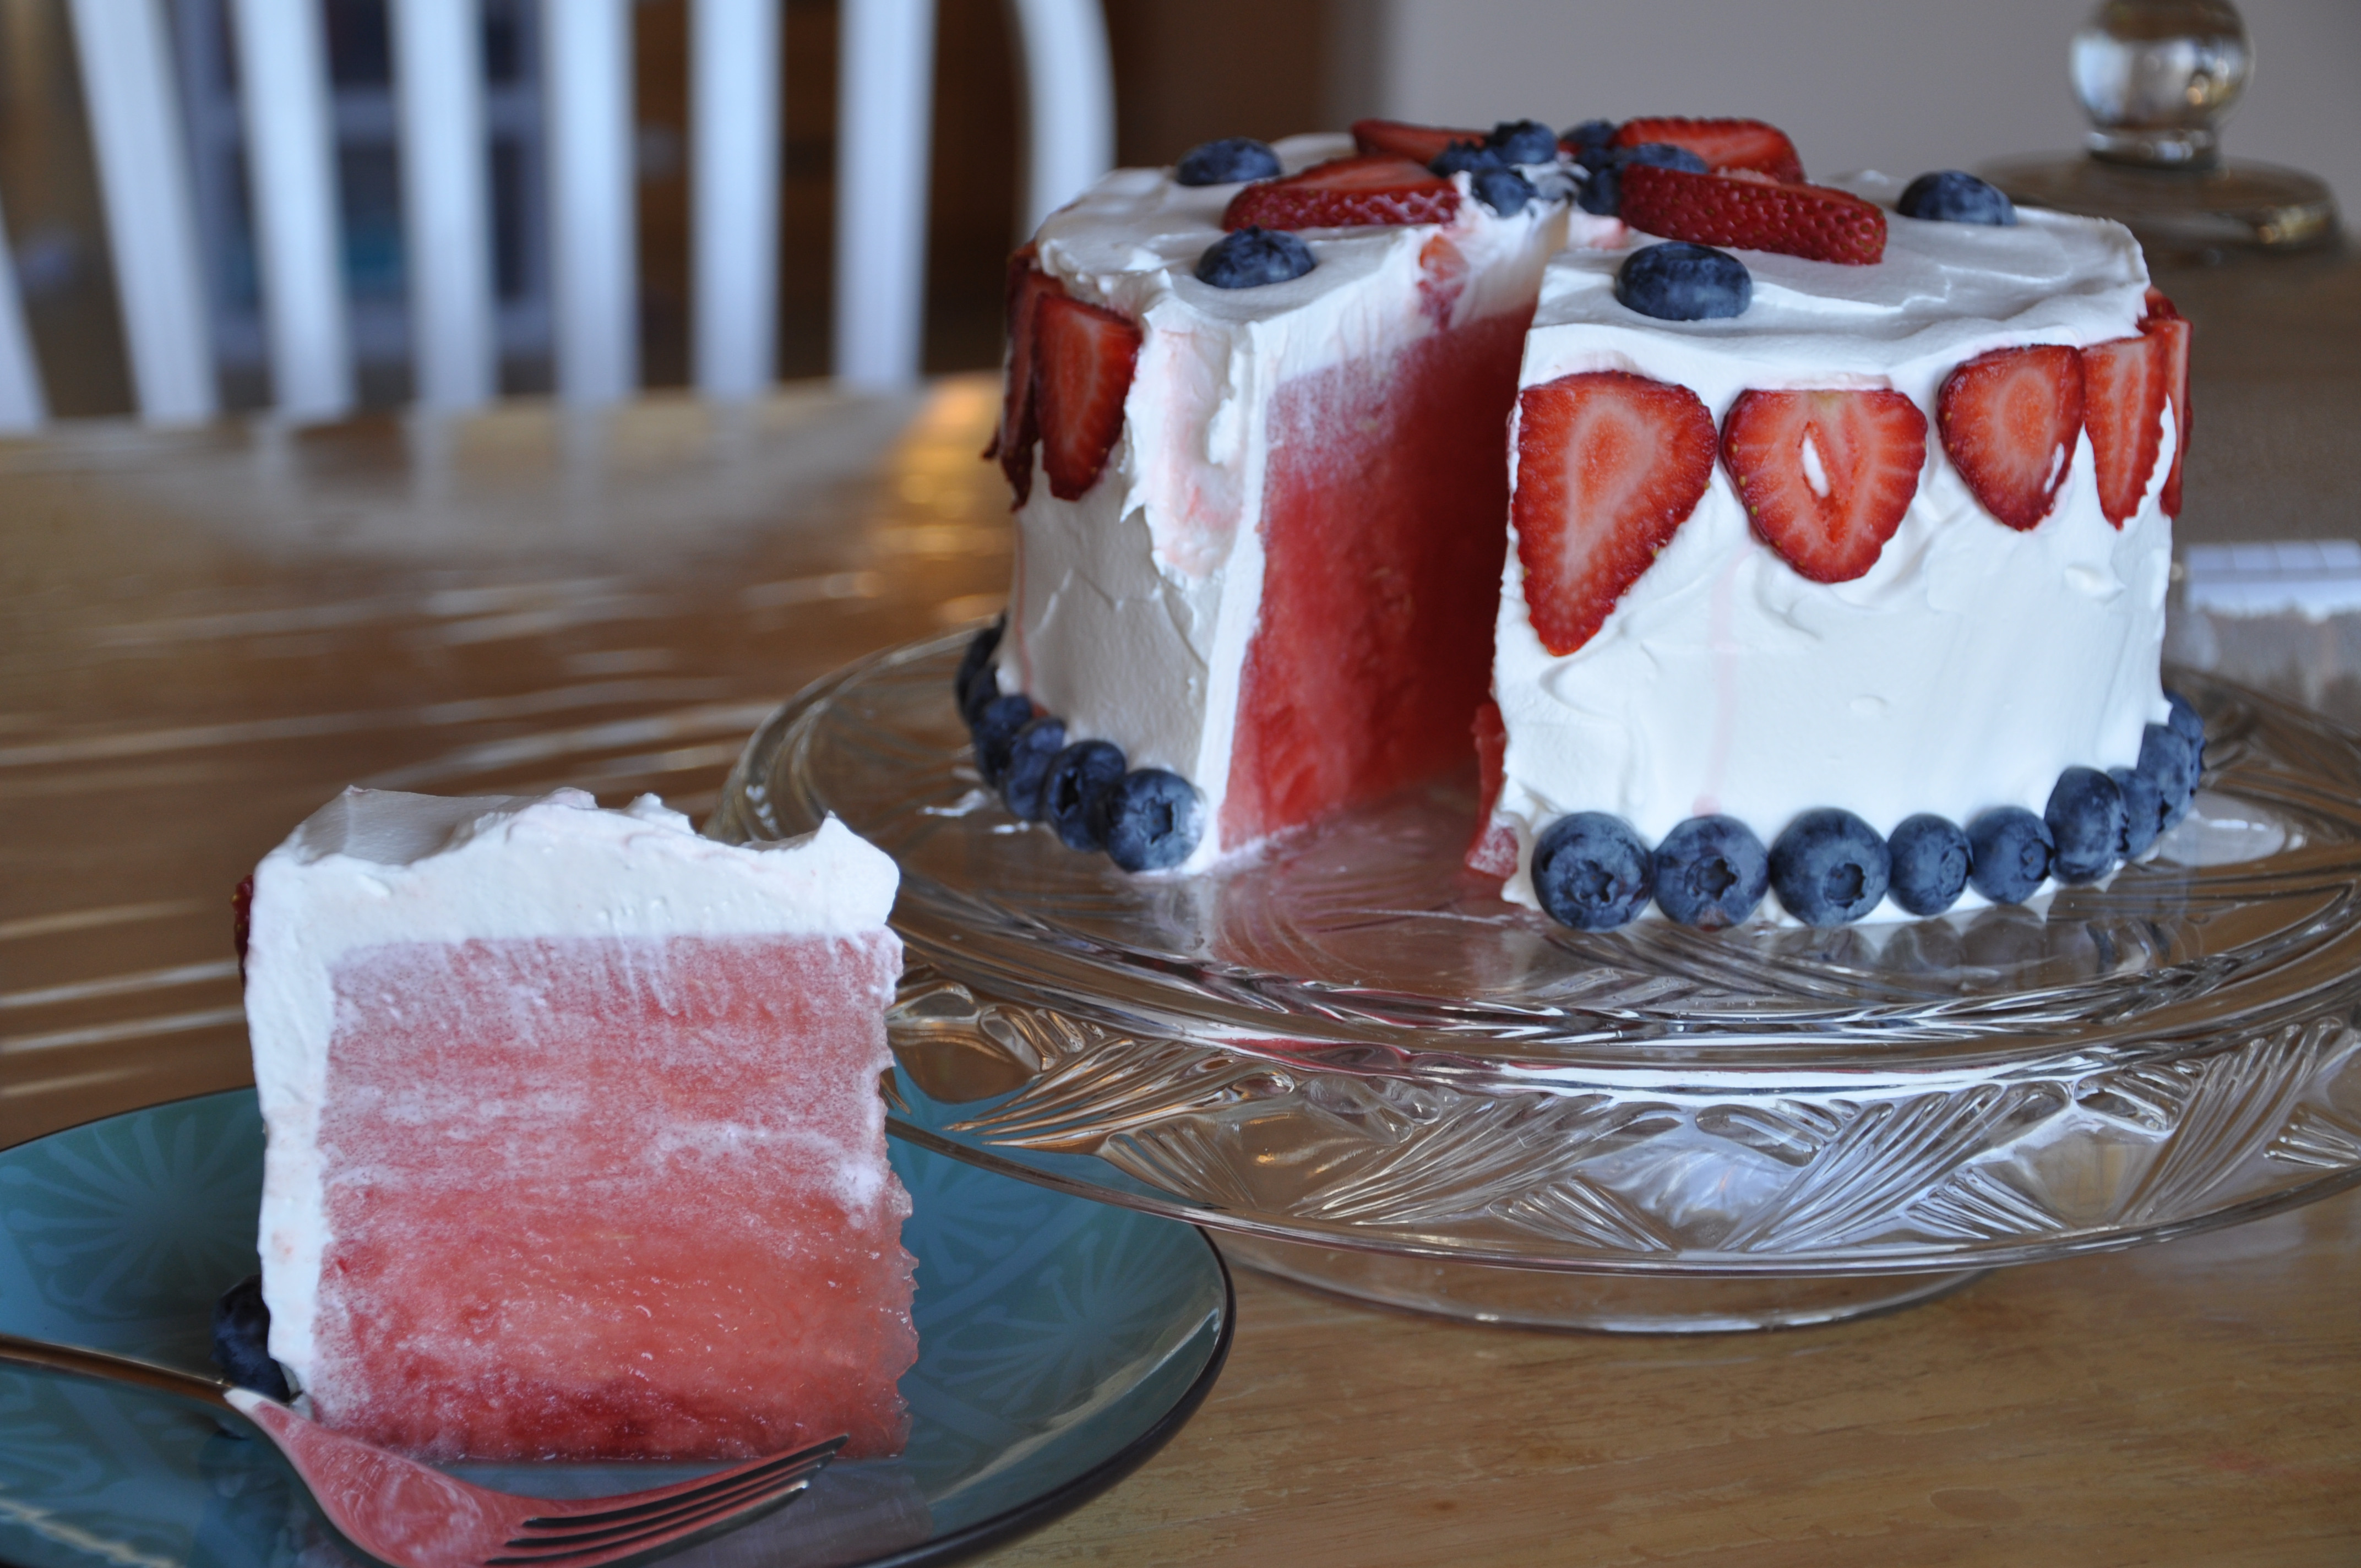 Healthy Birthday Cake Alternatives
 Watermelon Cake Recipe Healthy Alternative to Birthday Cake